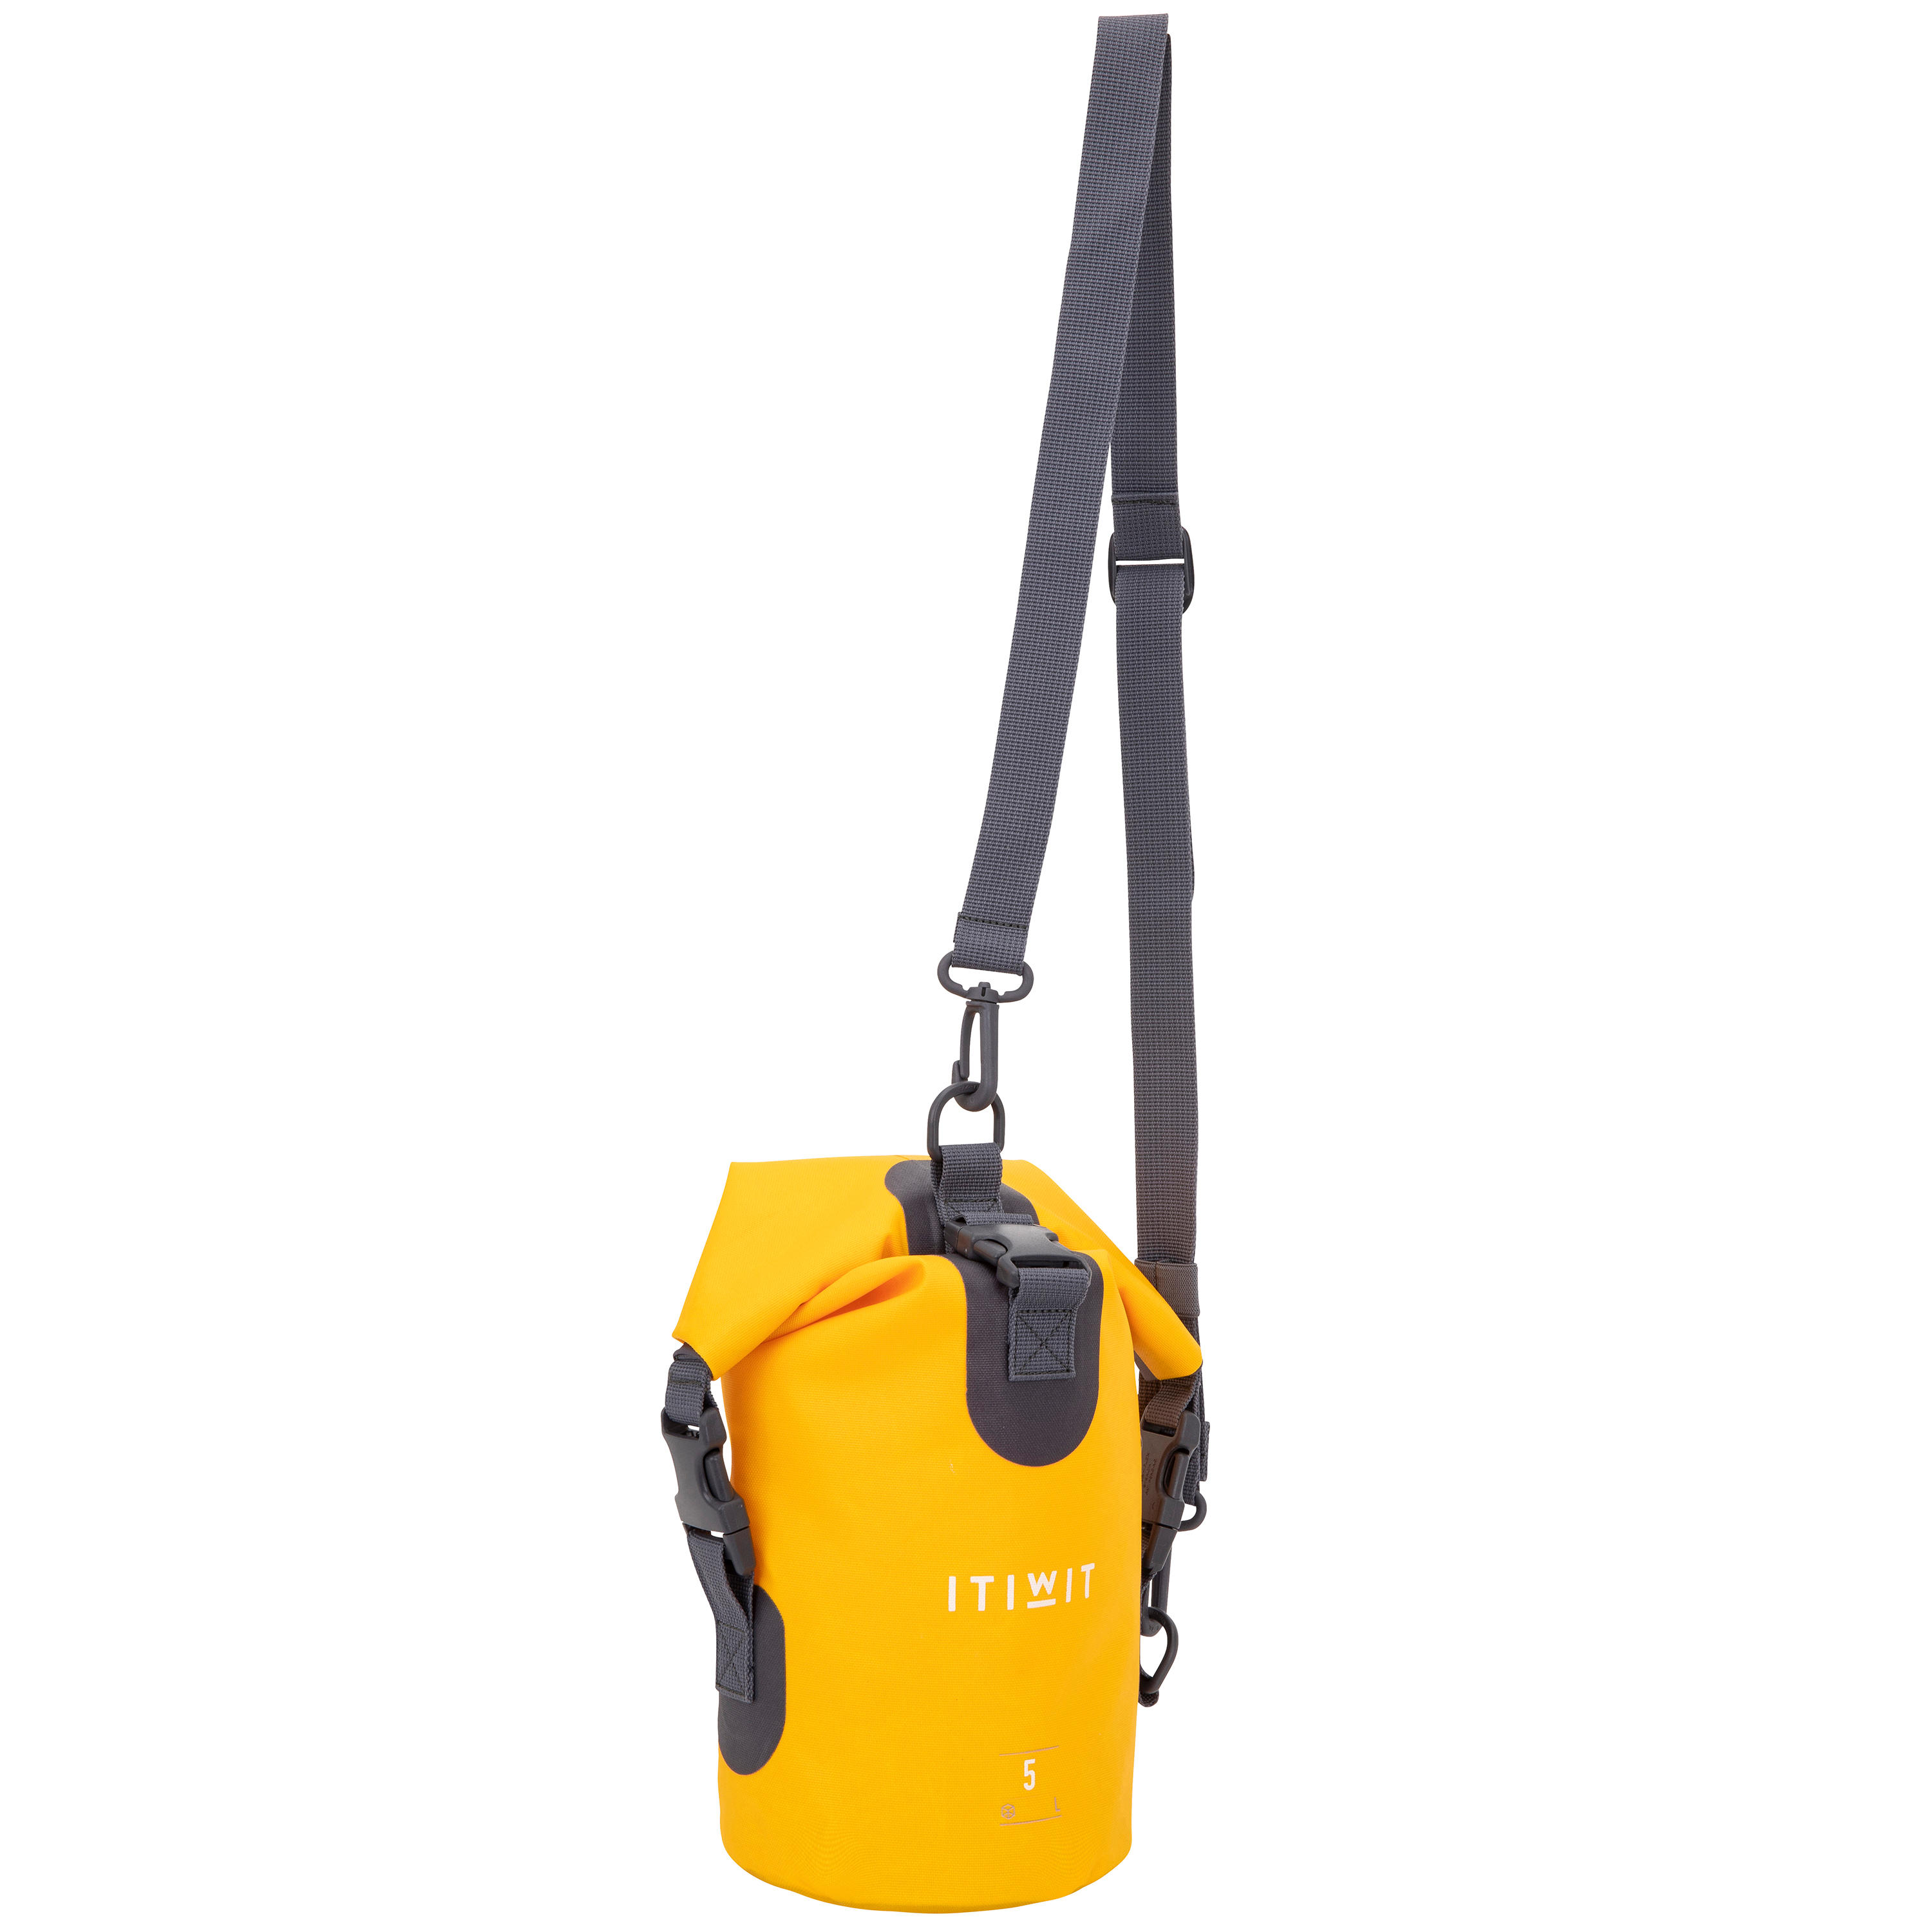 Waterproof Dry Bag 5L ITIWIT - Decathlon